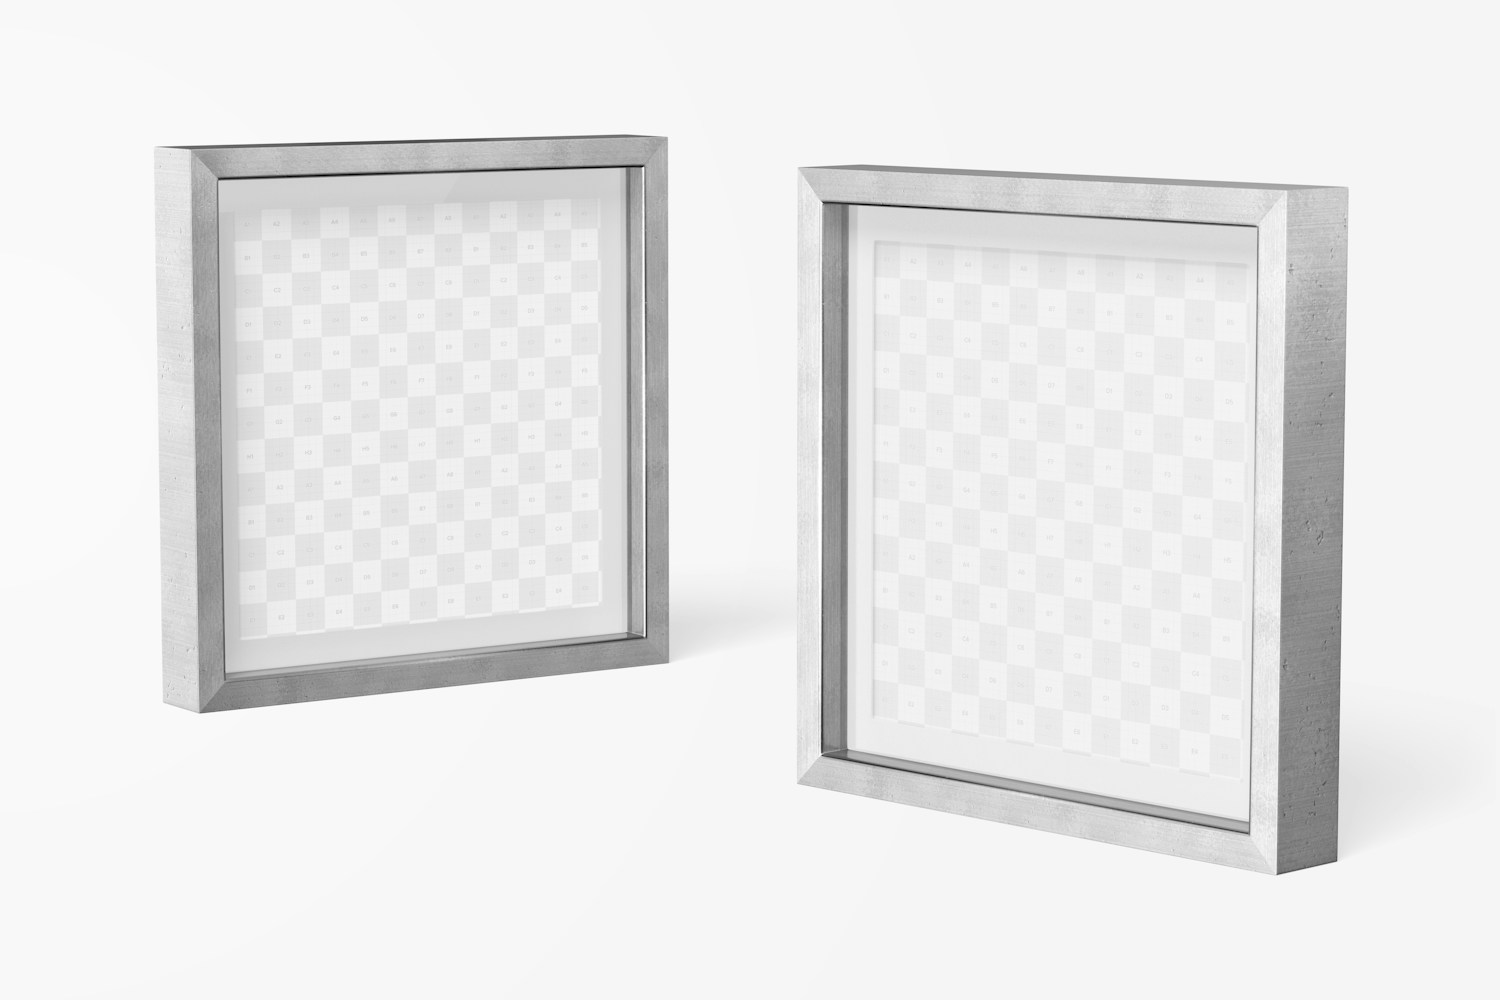 Square Metallic Shadow Box Frames Mockup, Perspective